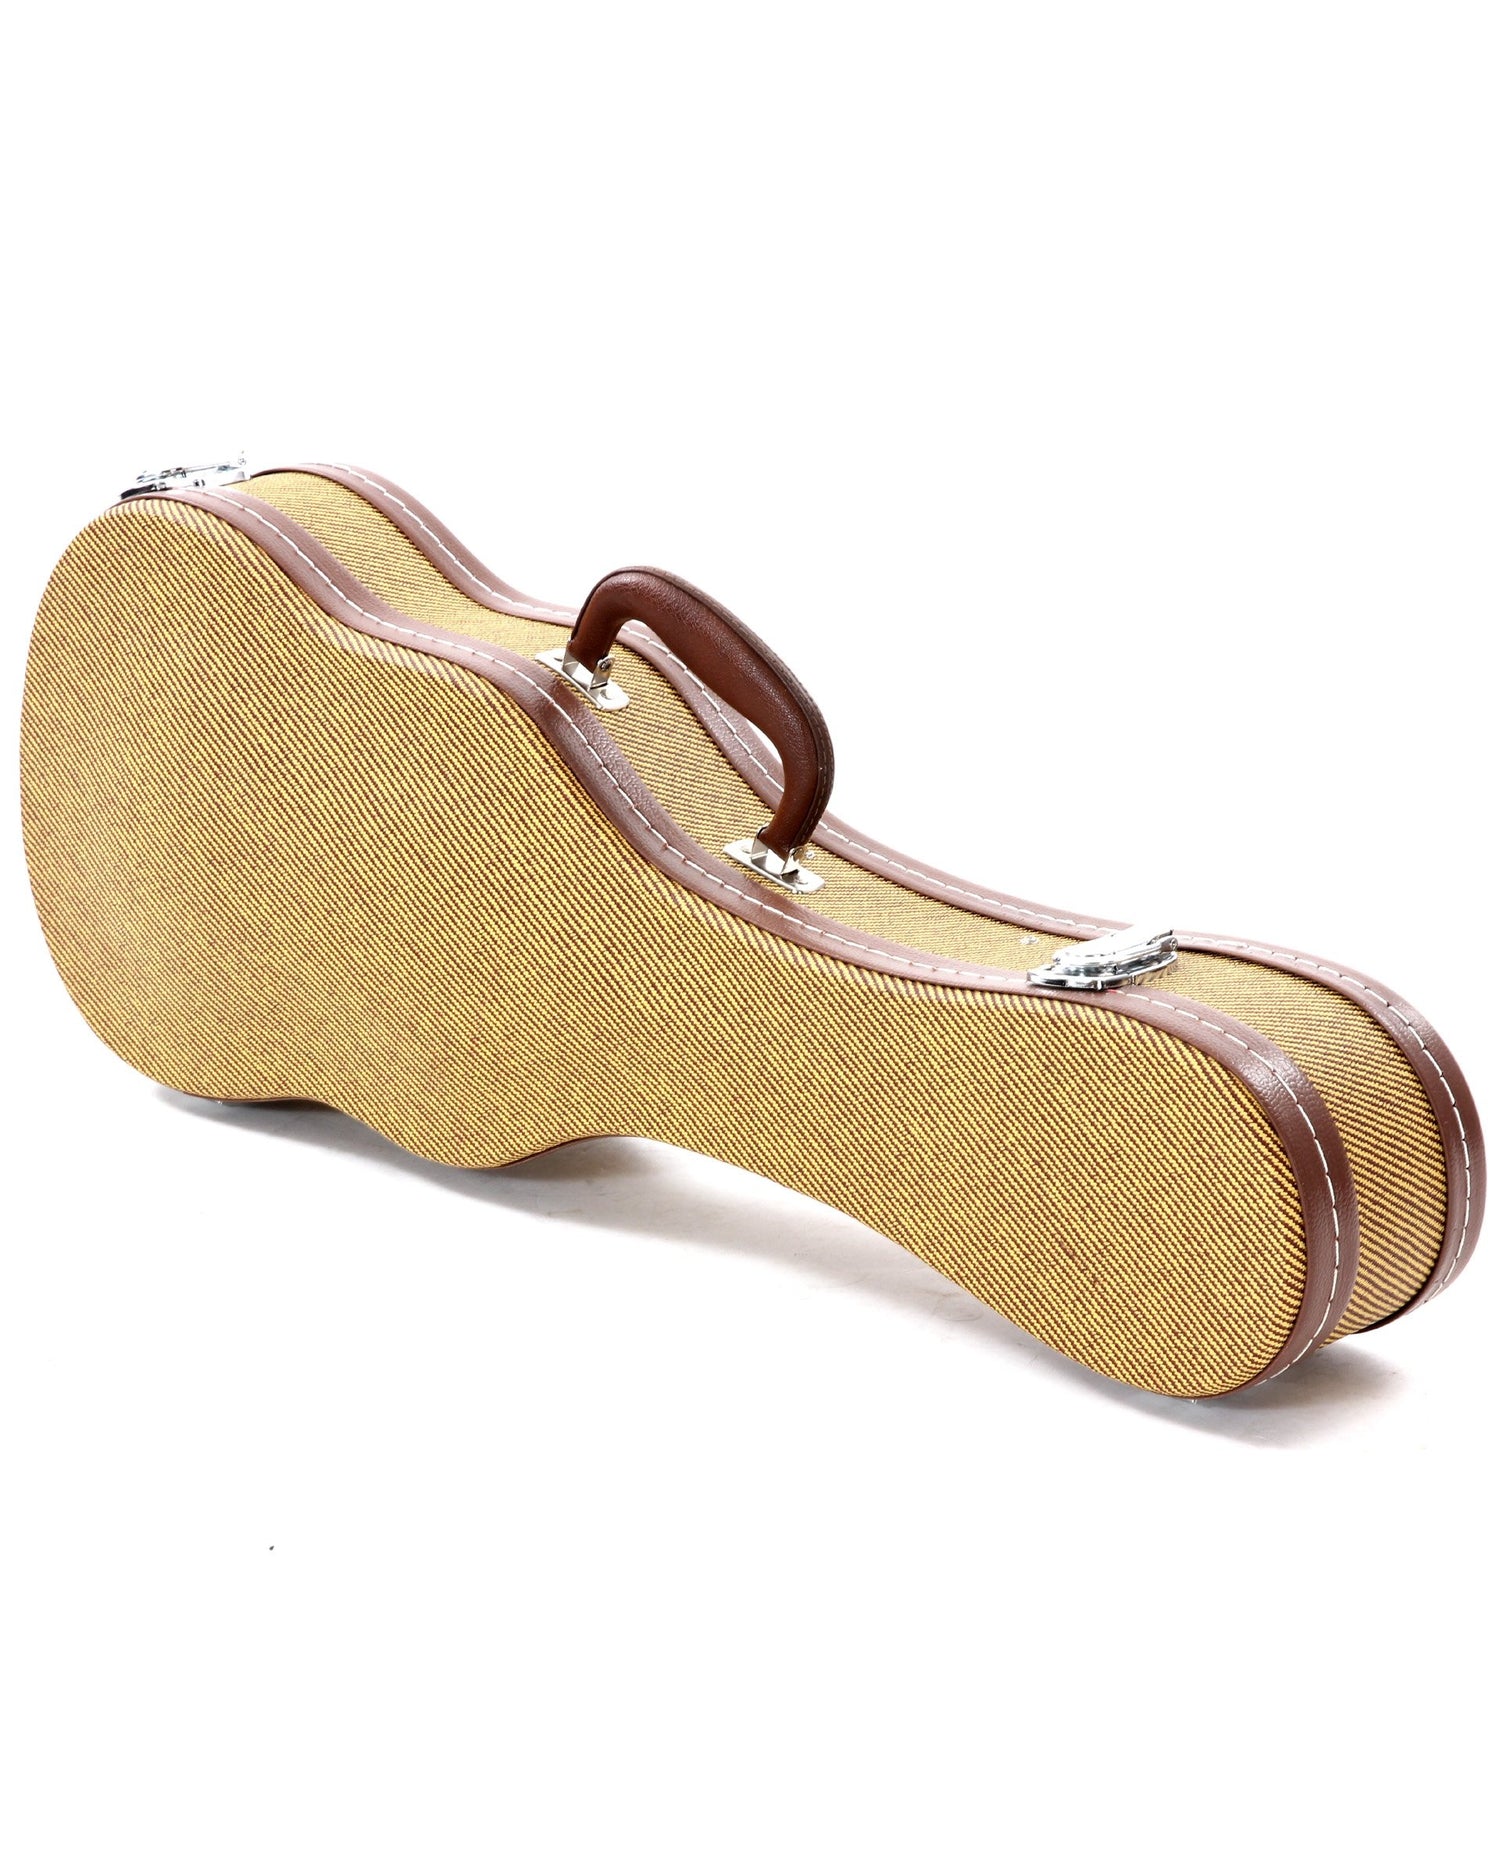 Image 1 of Ohana Tweed Concert Ukulele Case - SKU# TWDHS-C : Product Type Accessories & Parts : Elderly Instruments